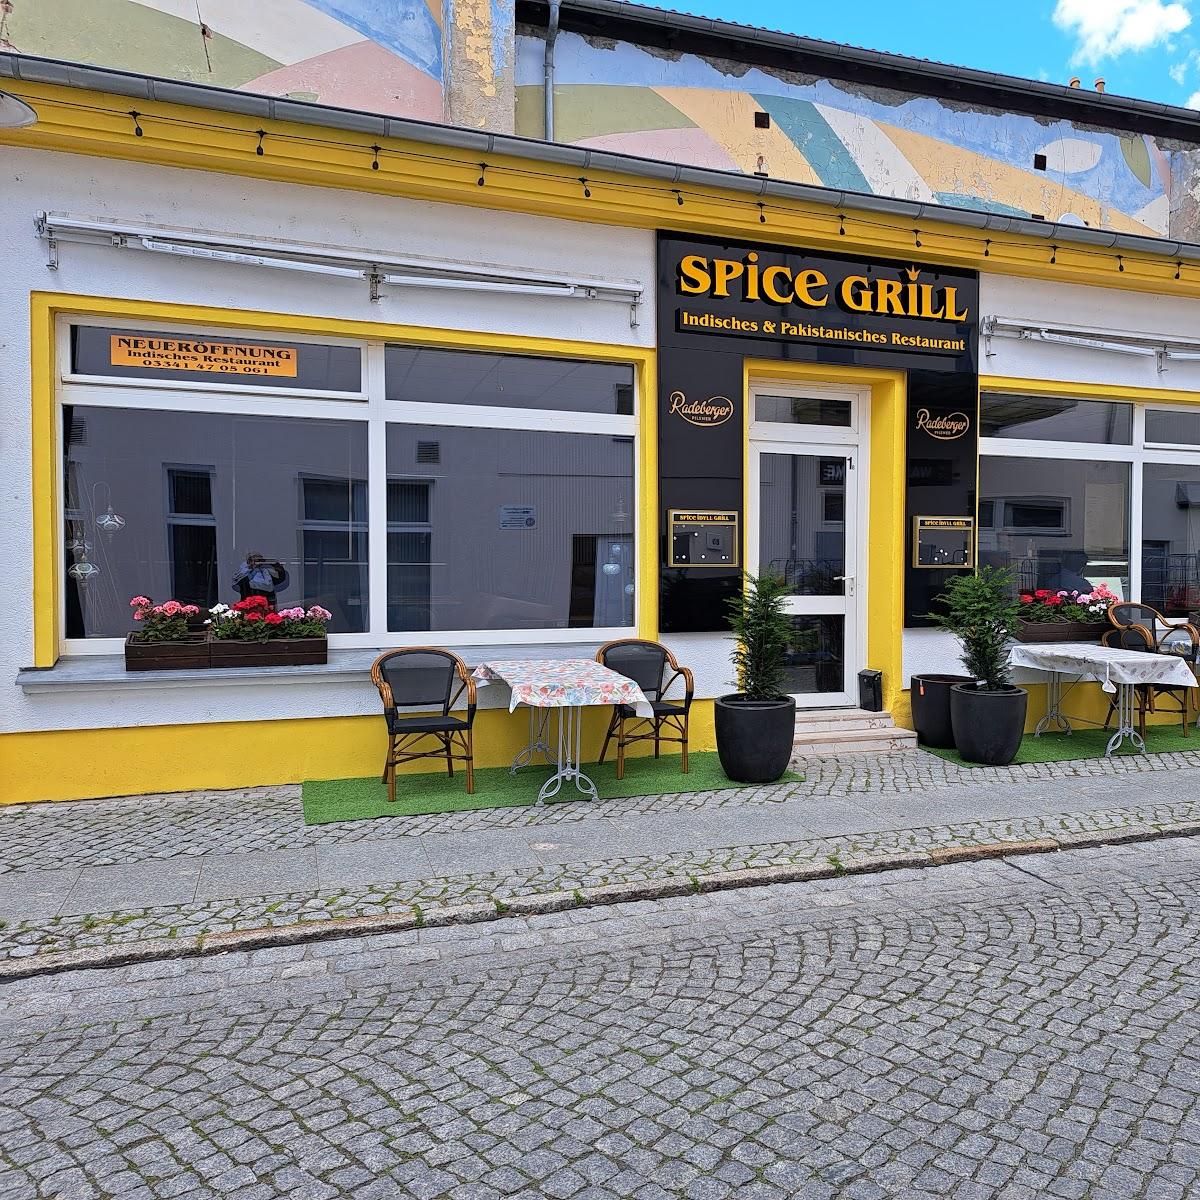 Restaurant "Spice Grill" in Strausberg